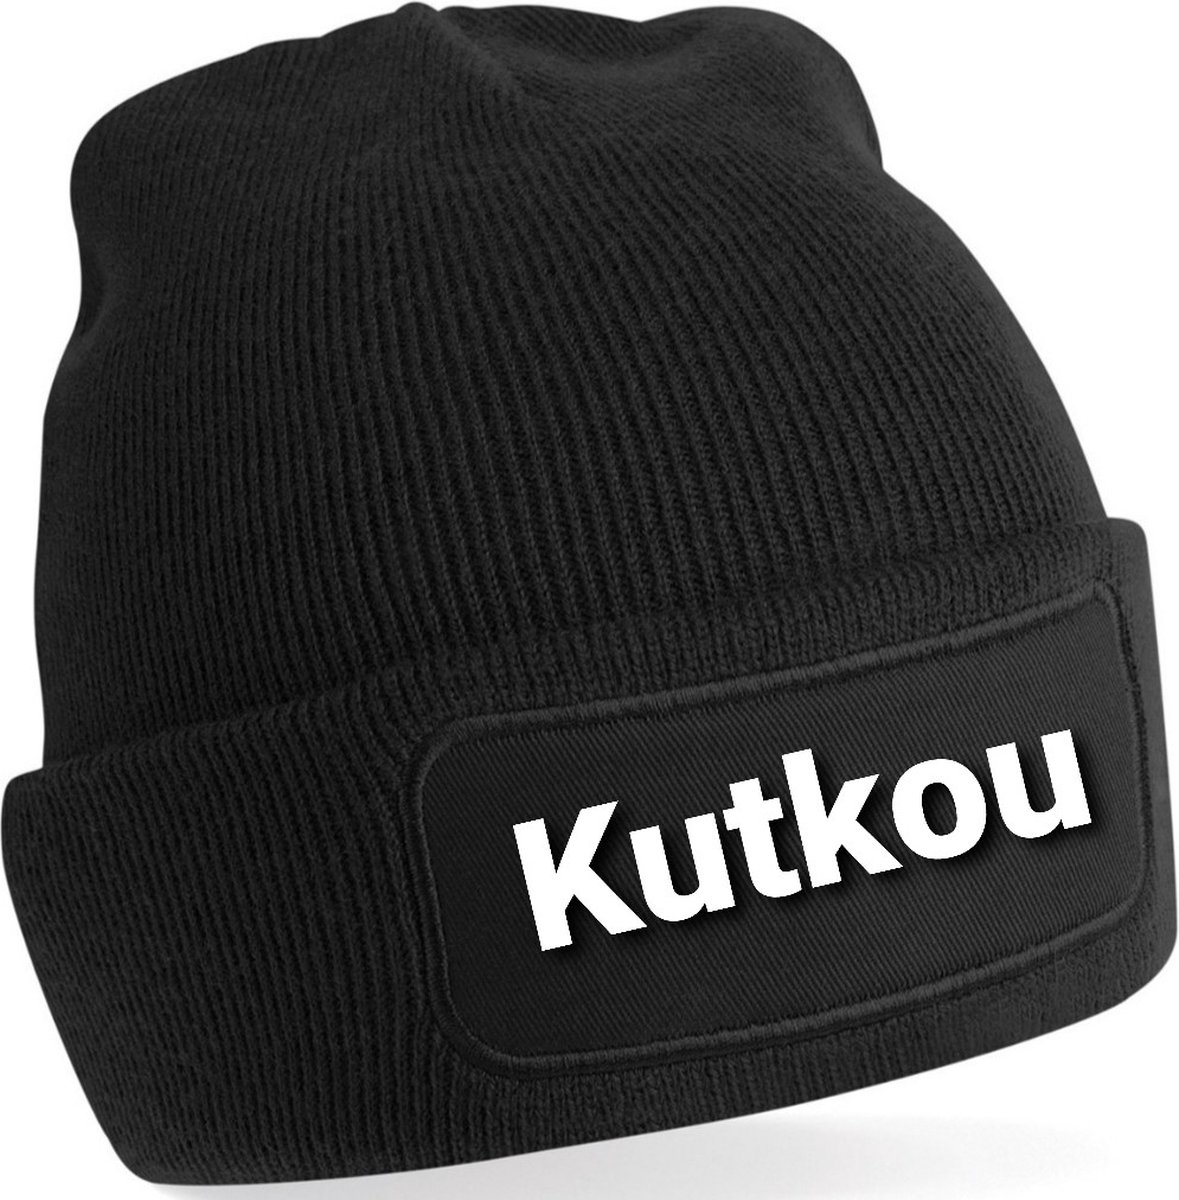 Muts - Beanie - kutkou - feestdagen - winter - zwart met witte opdruk